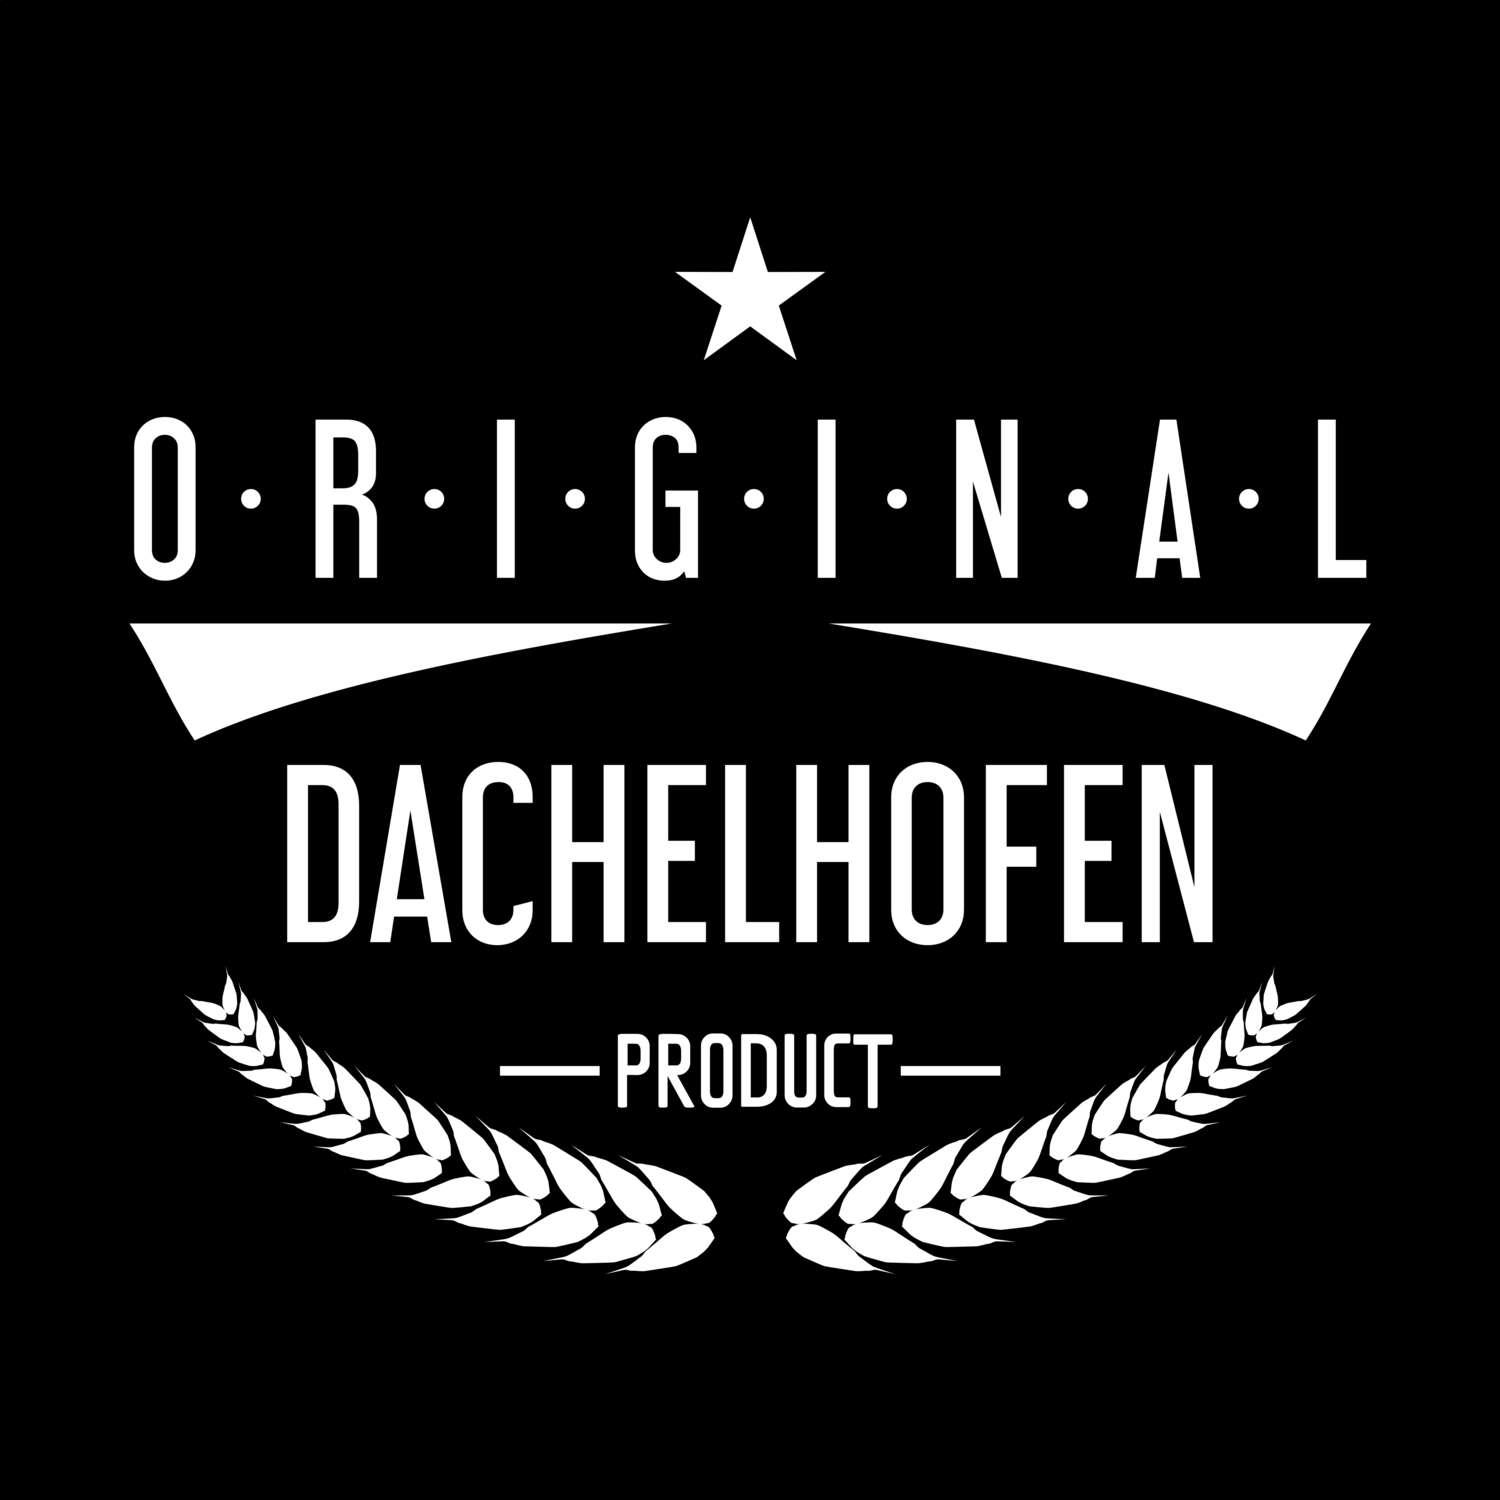 Dachelhofen T-Shirt »Original Product«